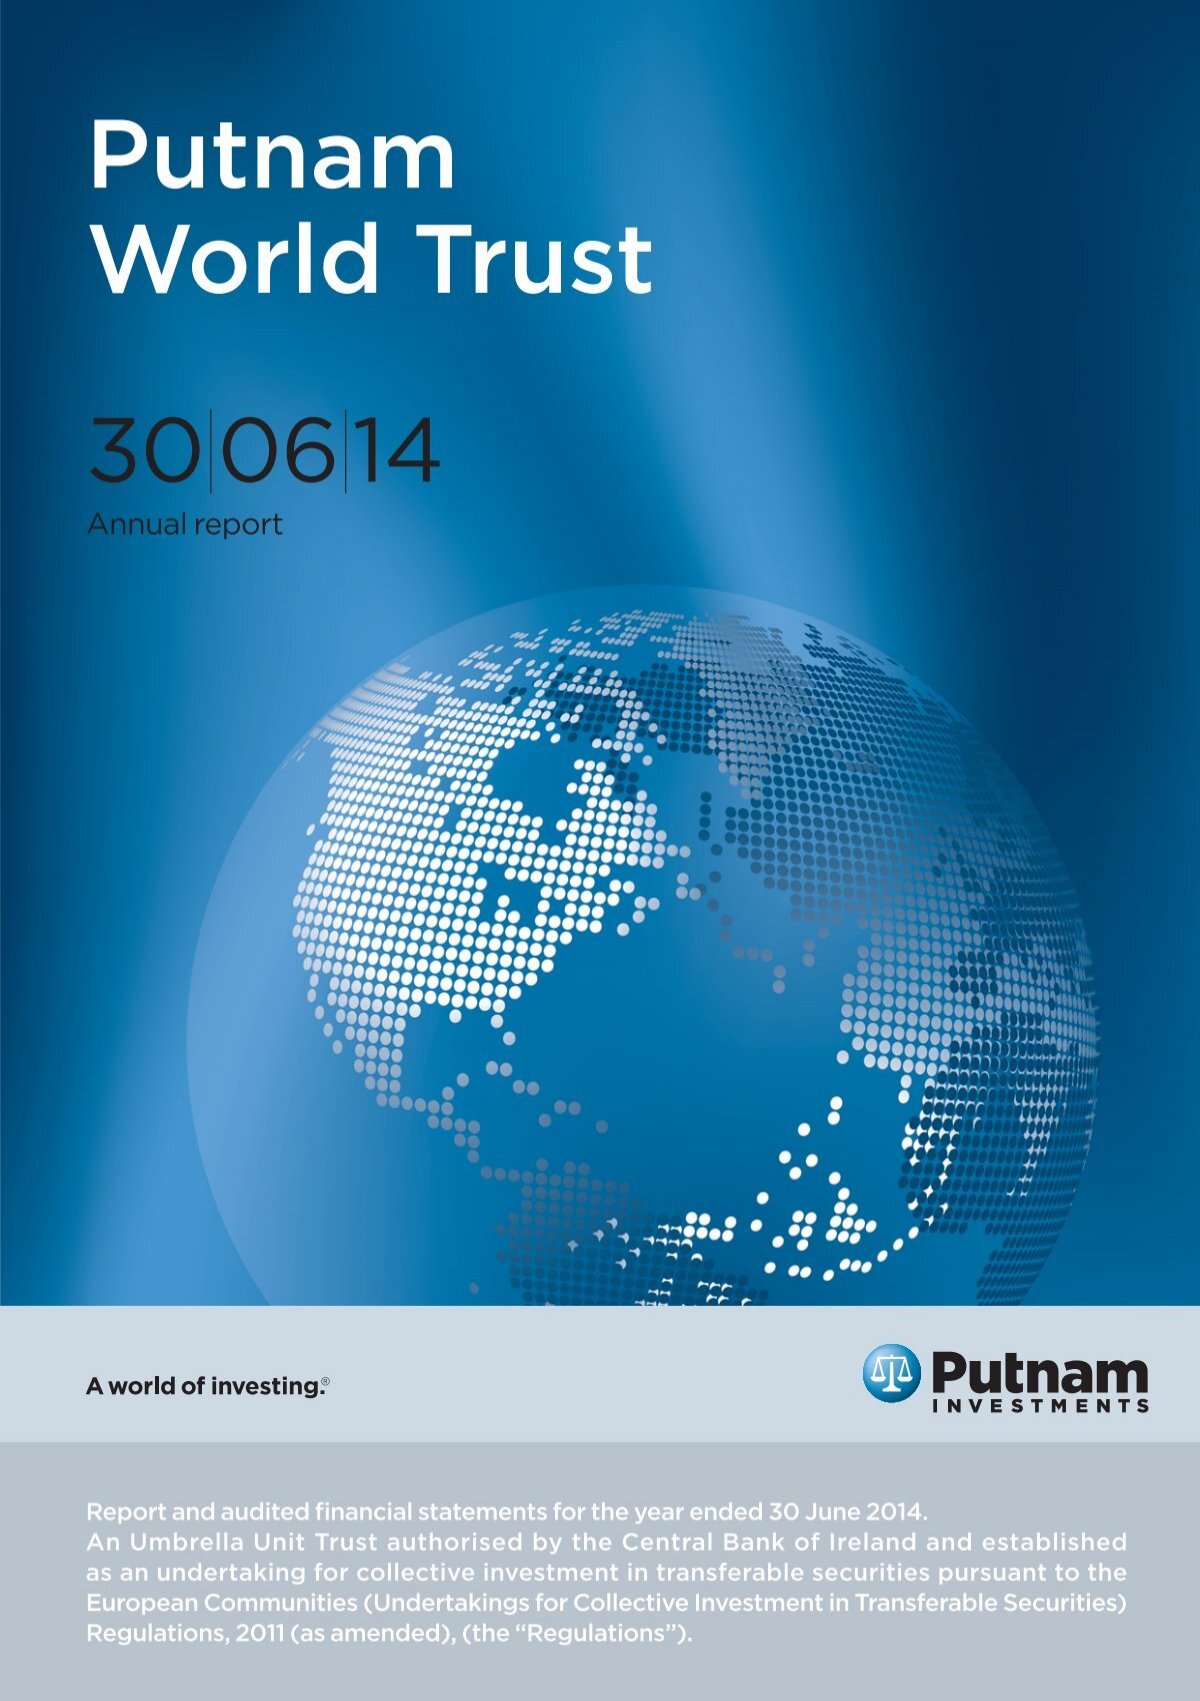 English - World Trust Annual Report - Putnam Investments